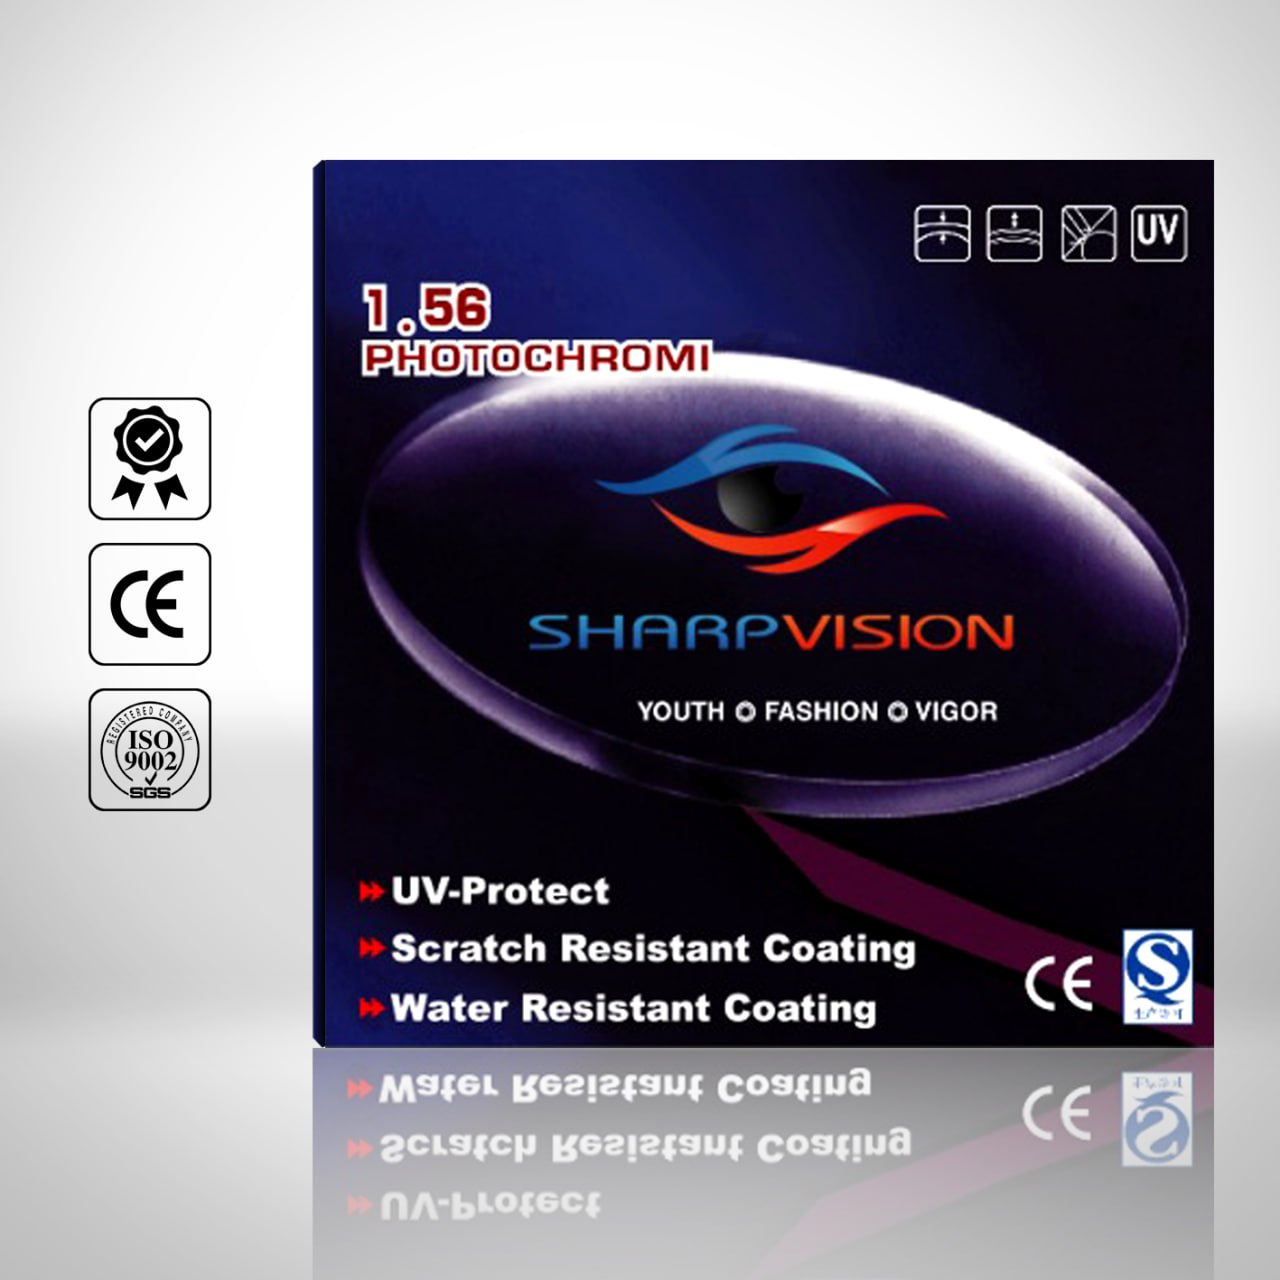 Sharp Vision 1.56 PhotoGrey clear base